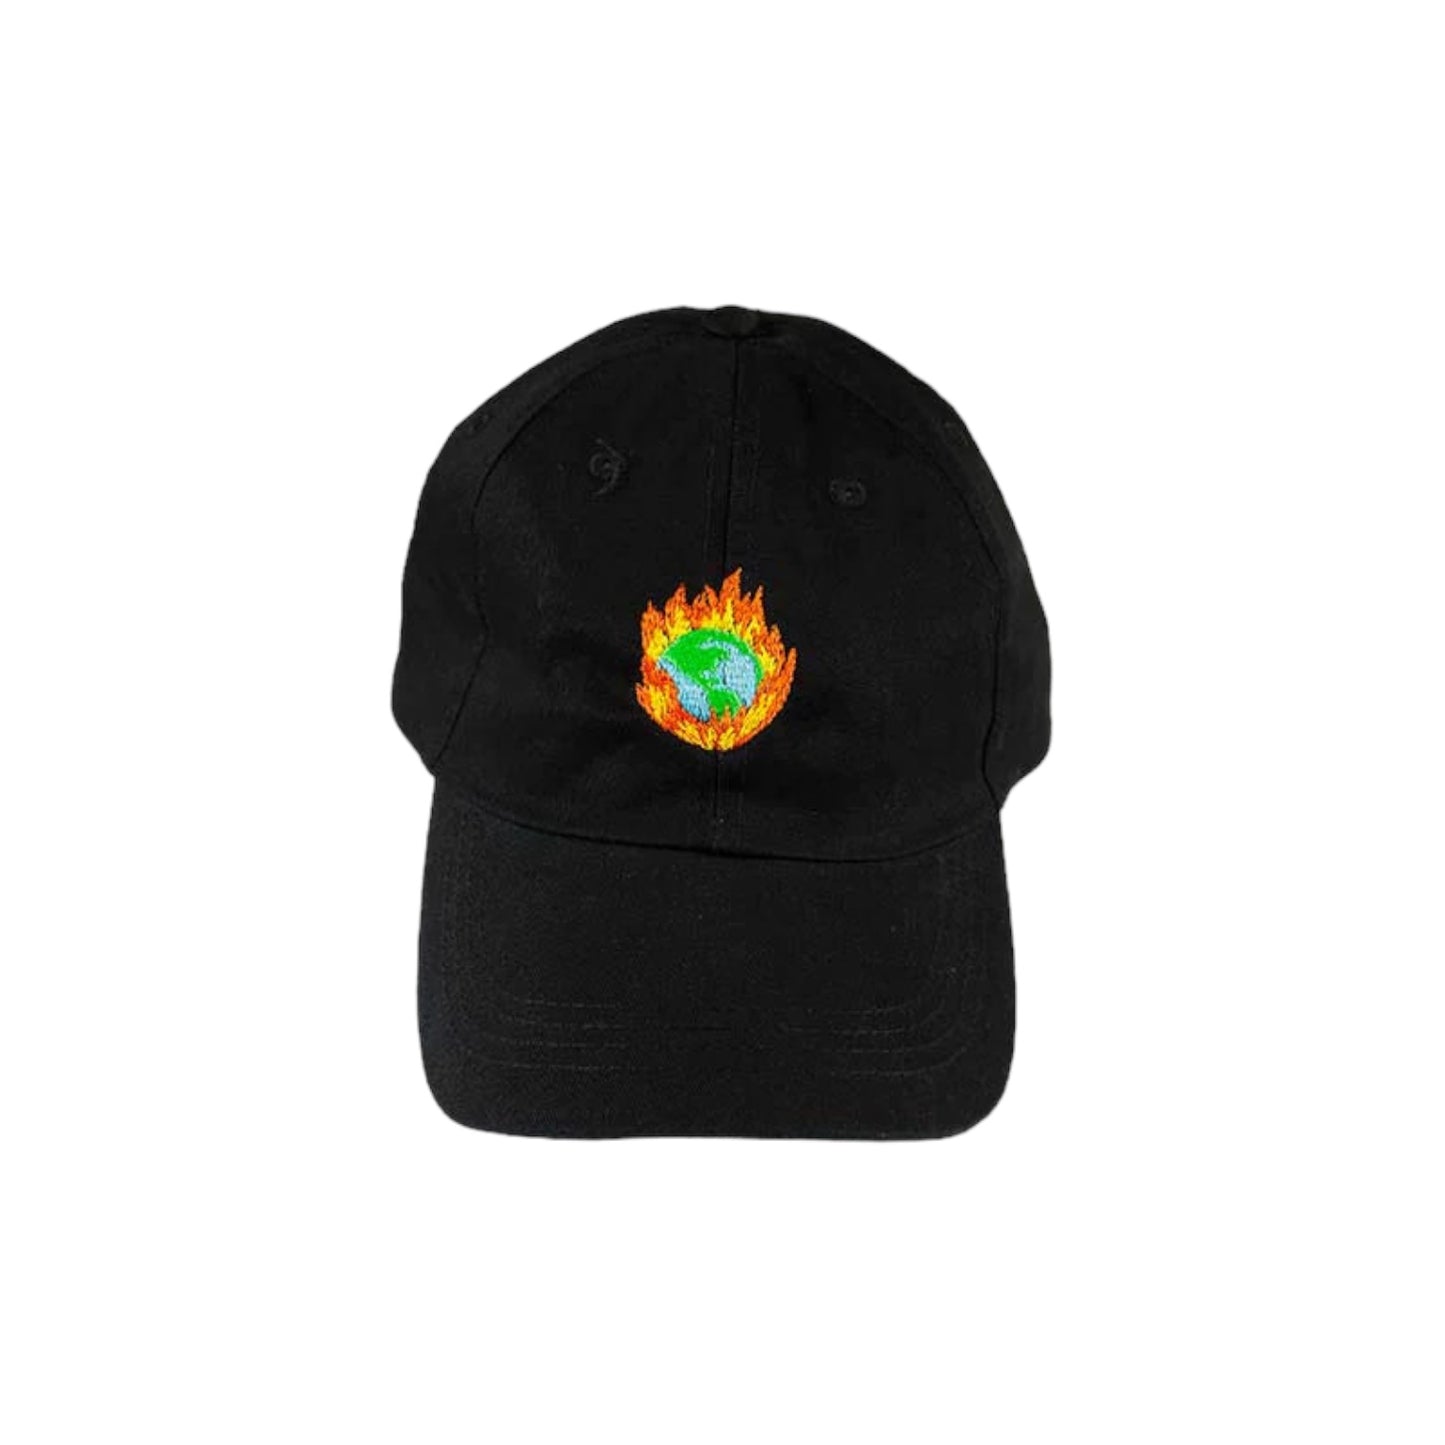 Sour - In Flames Cap - Black